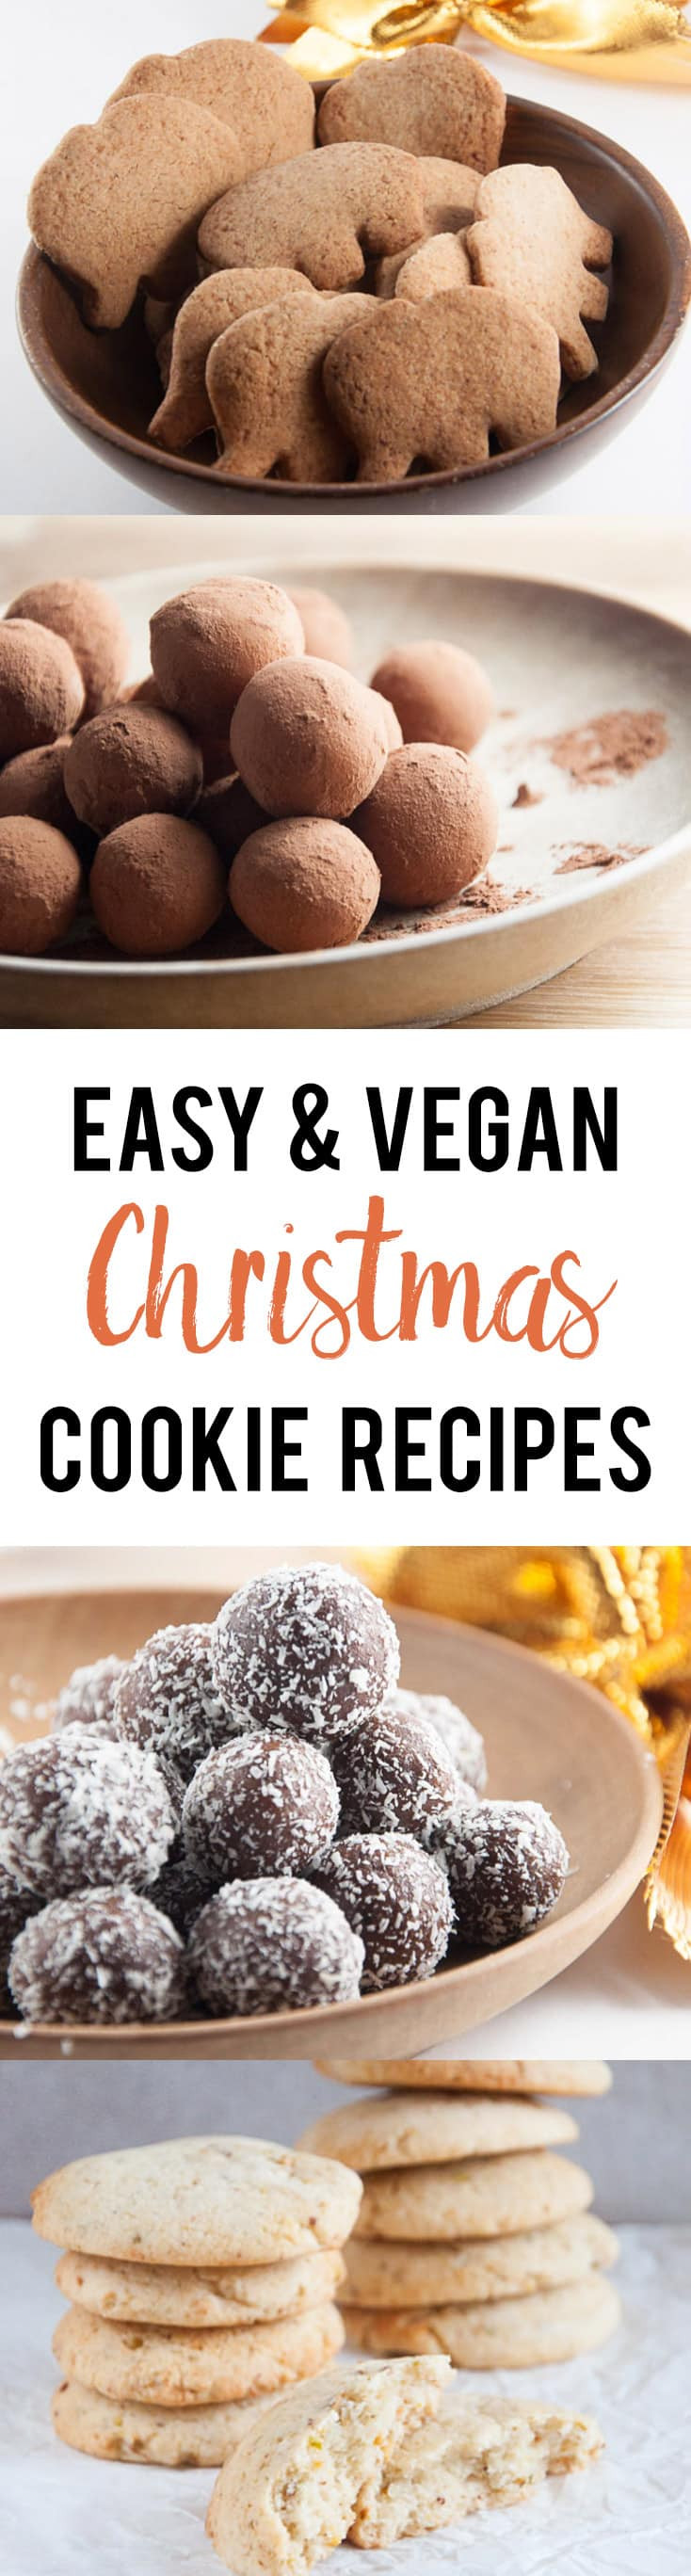 Vegan Christmas Cookie Recipes
 10 Easy Vegan Christmas Cookie Recipes